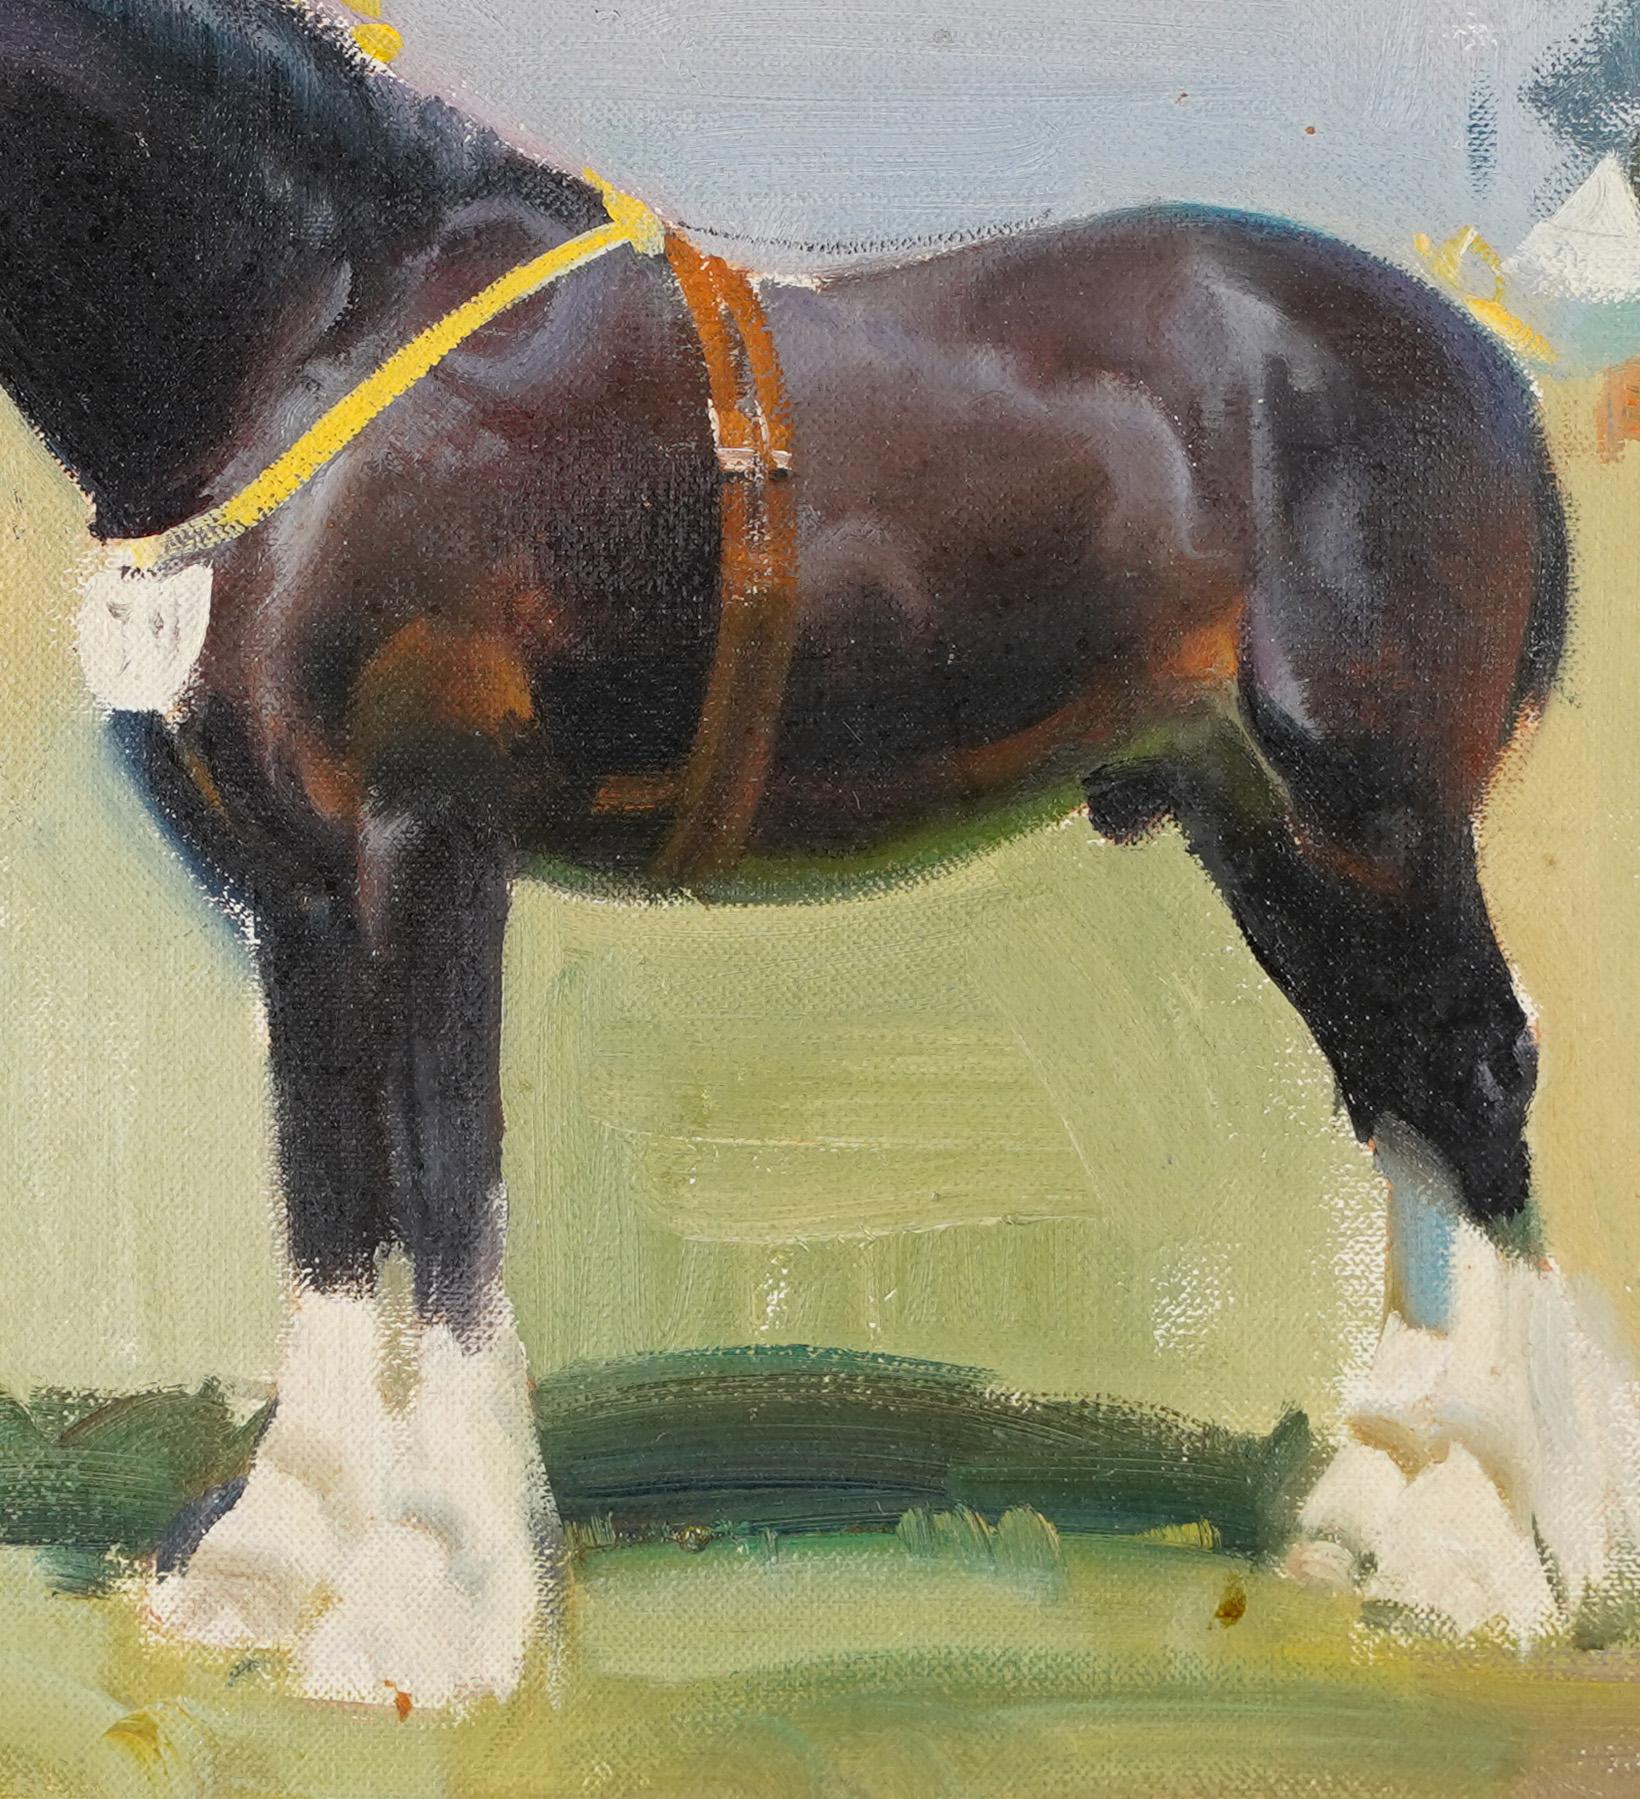 Vintage impressionist horse portrait painting.  Oil on board.  Nicely framed.  Image size, 13L x 11H.  Signed.
